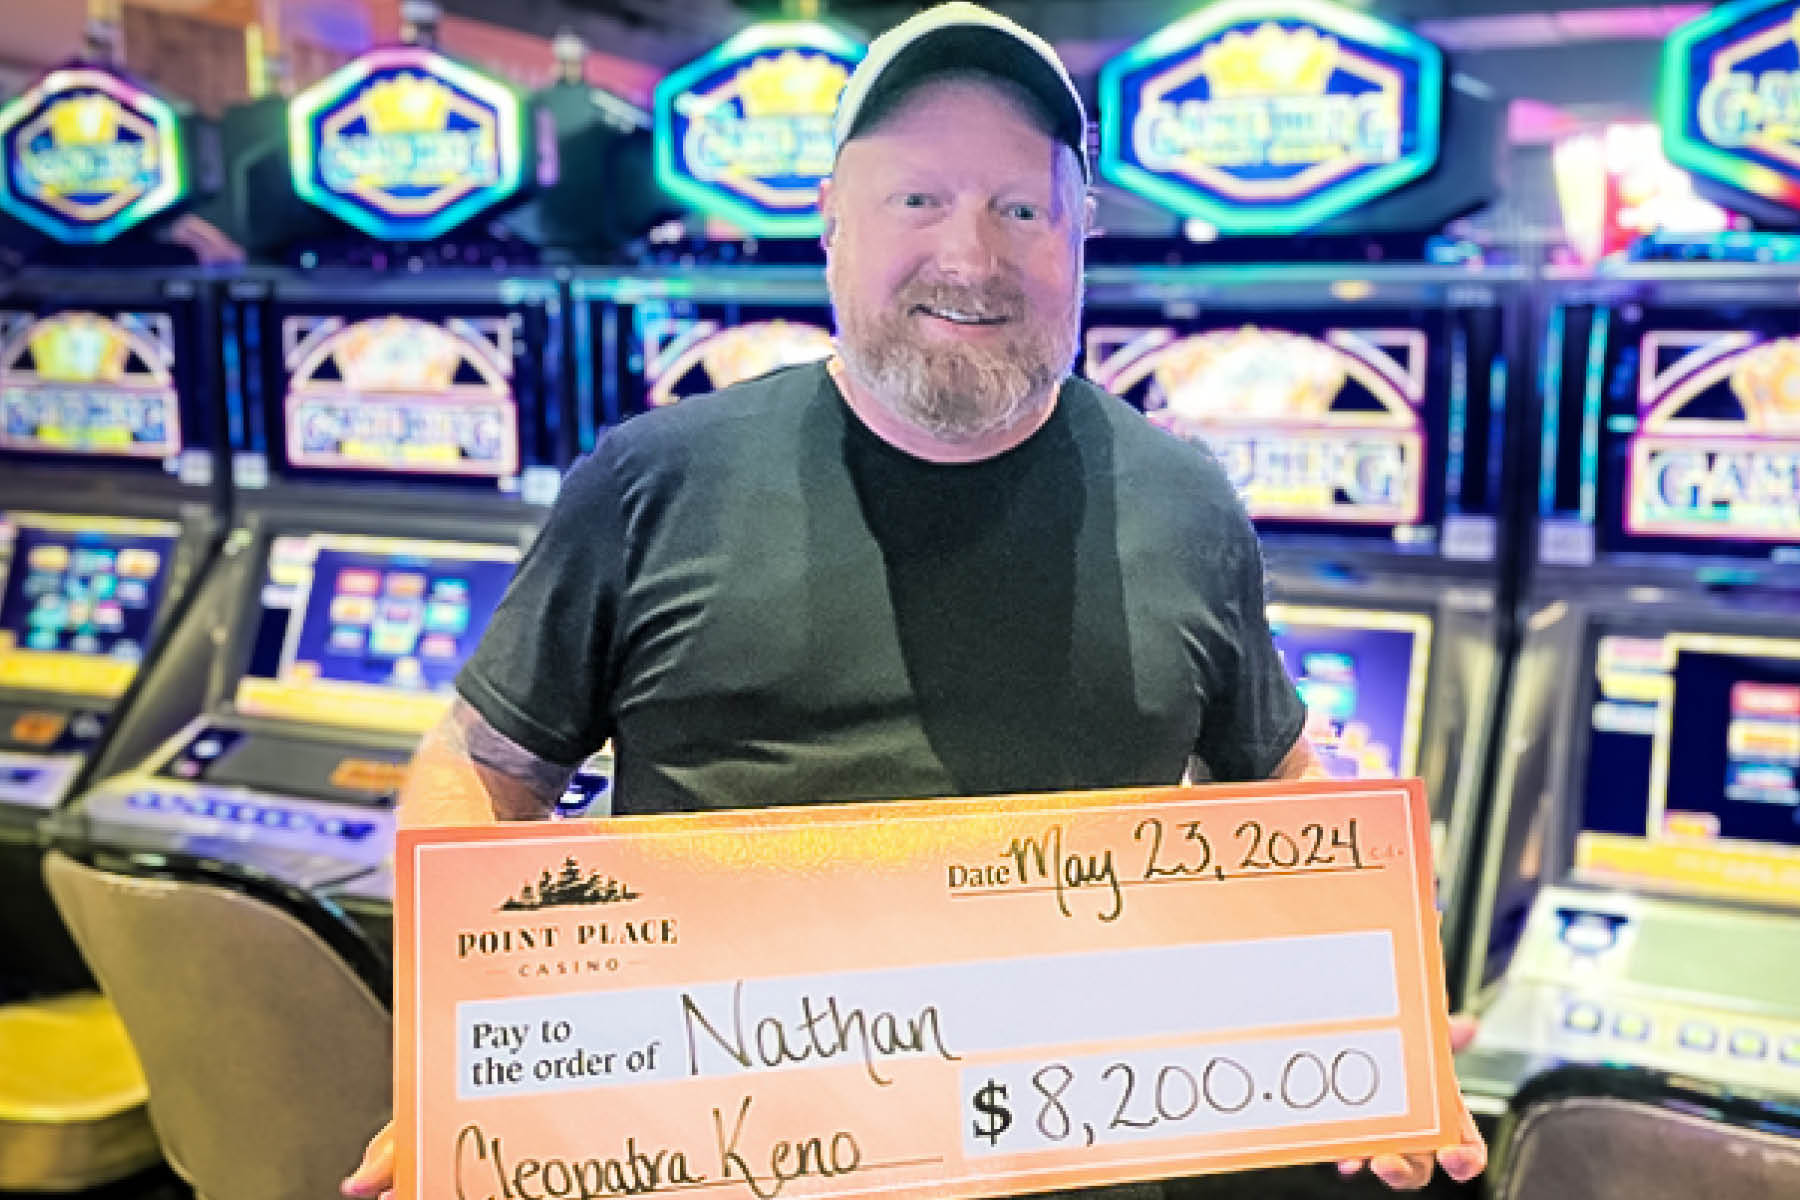 Nathan won $8,200